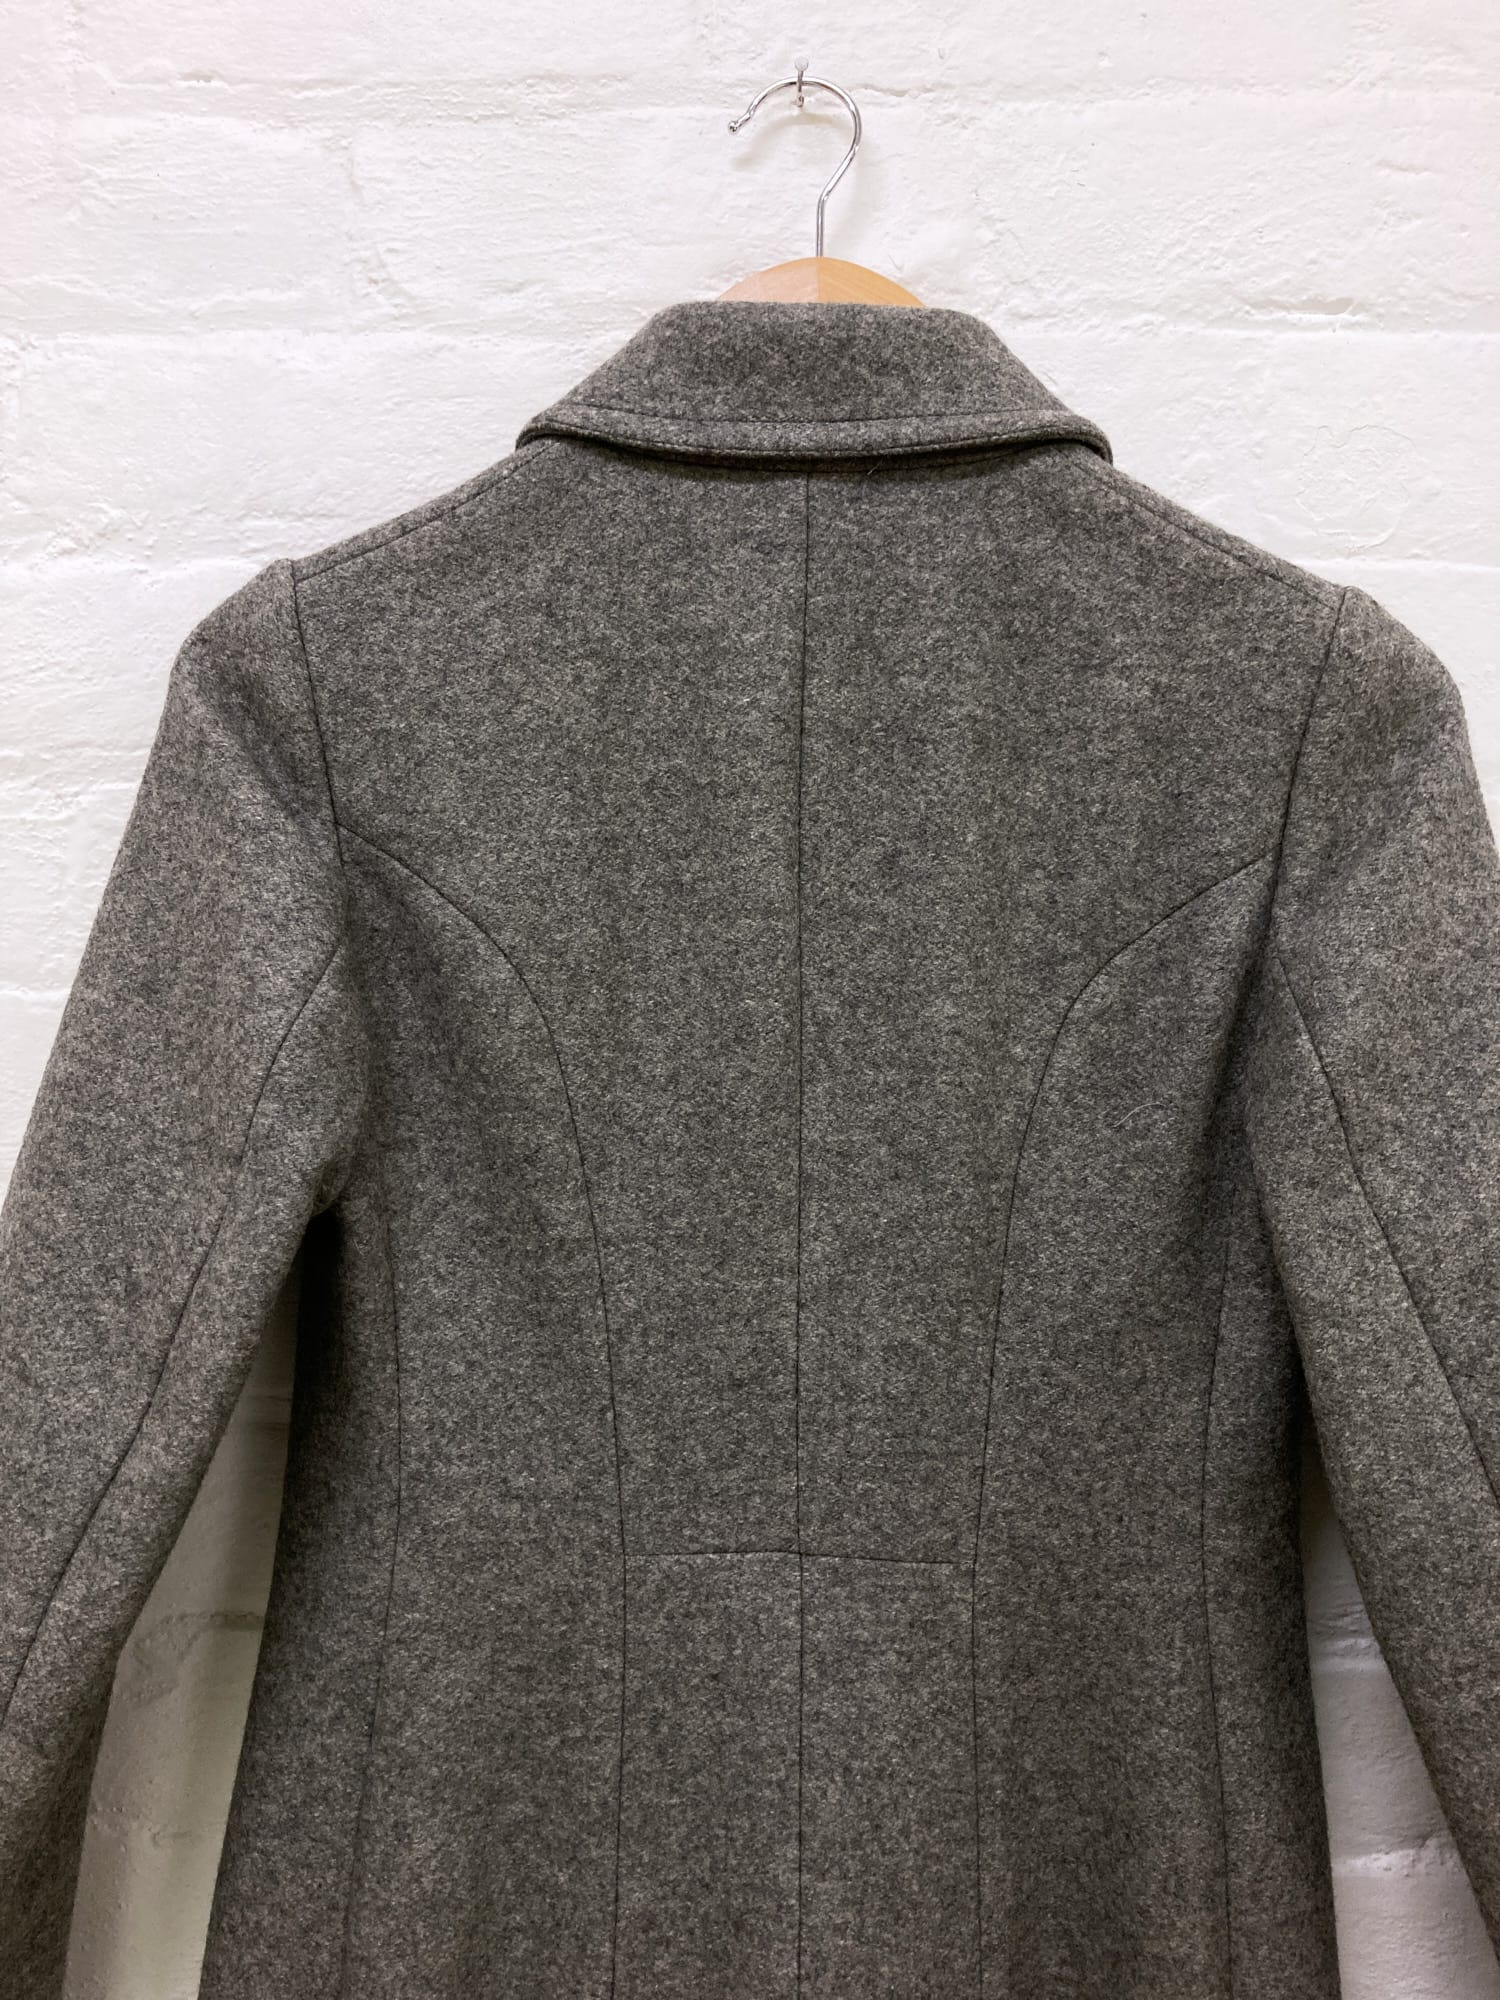 Miu Miu 1990s grey wool melton curved placket coat - size 38 6